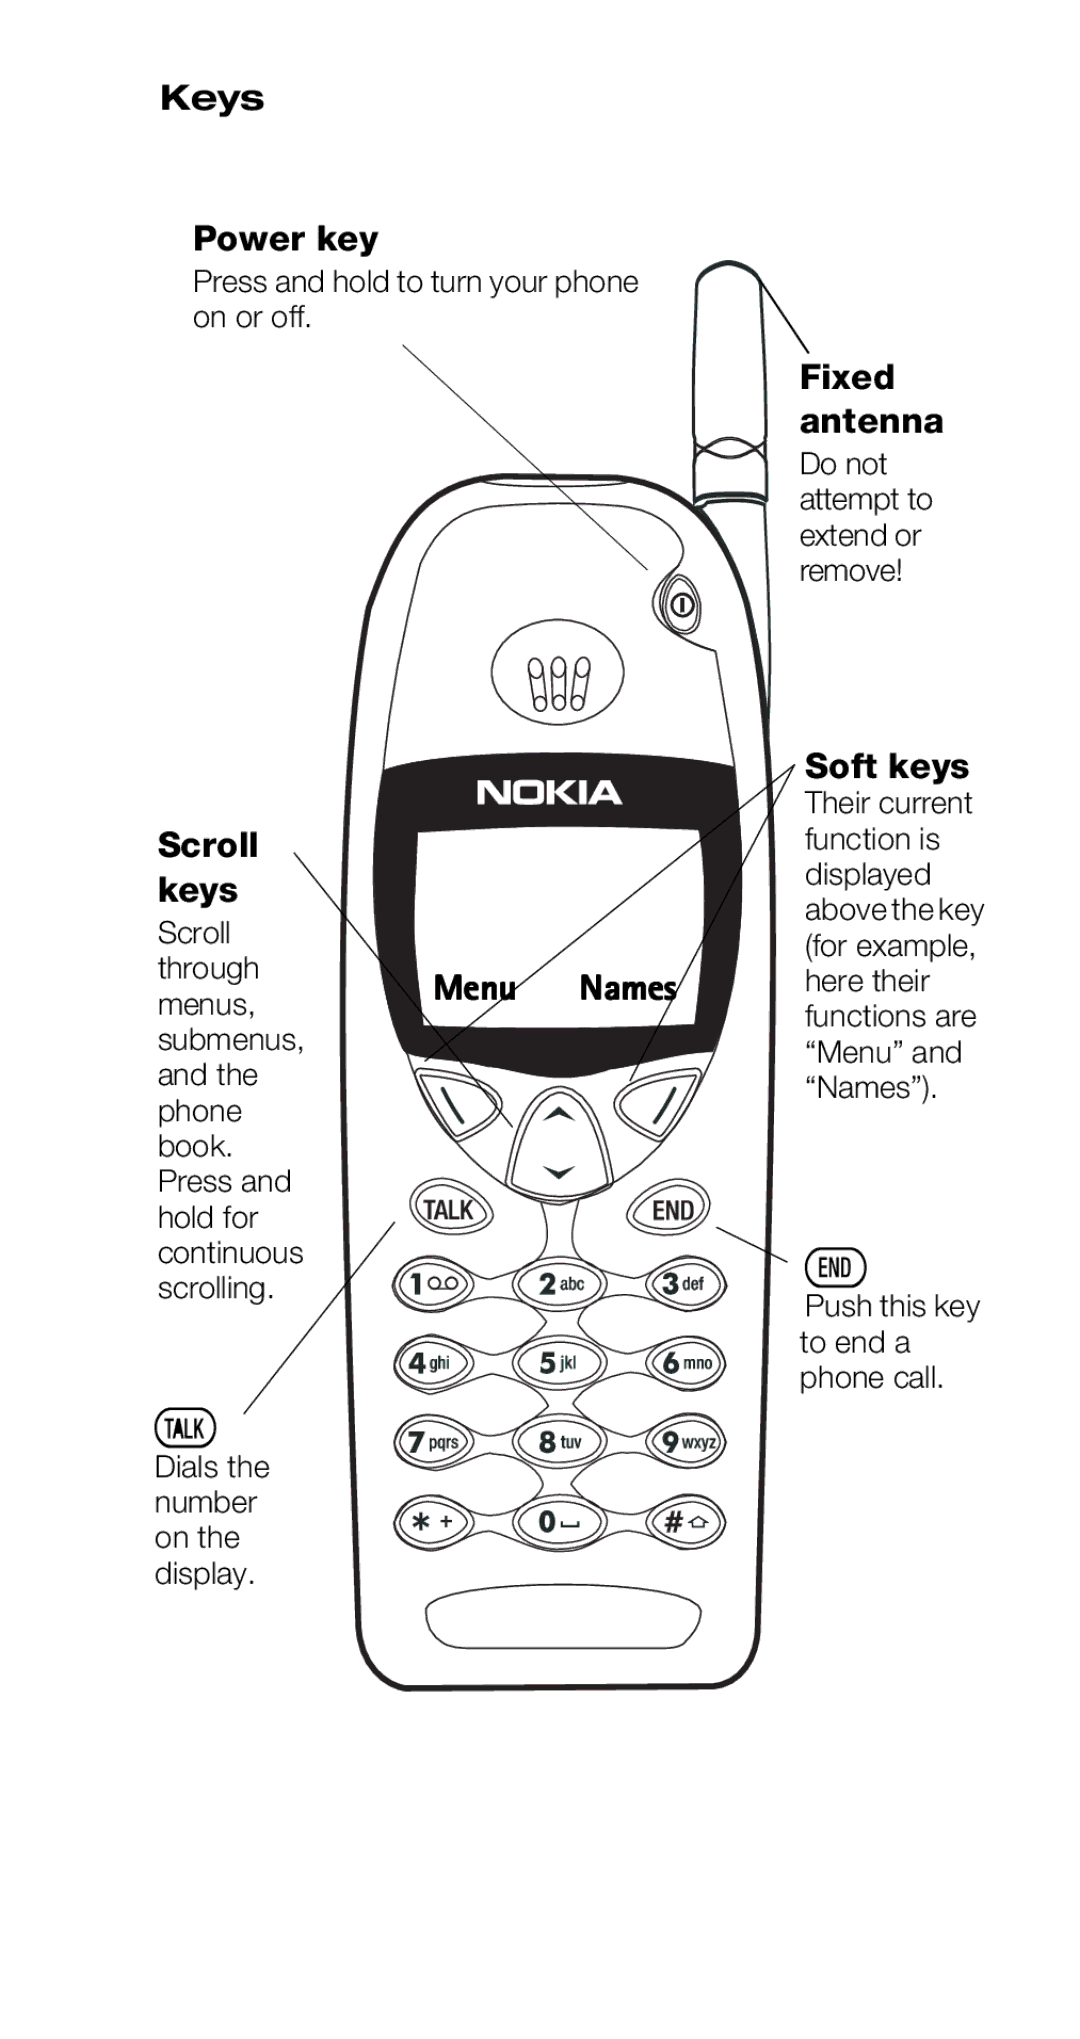 Nokia 6160 manual Keys Power key, Scroll keys, Menu, Fixed antenna, Soft keys 